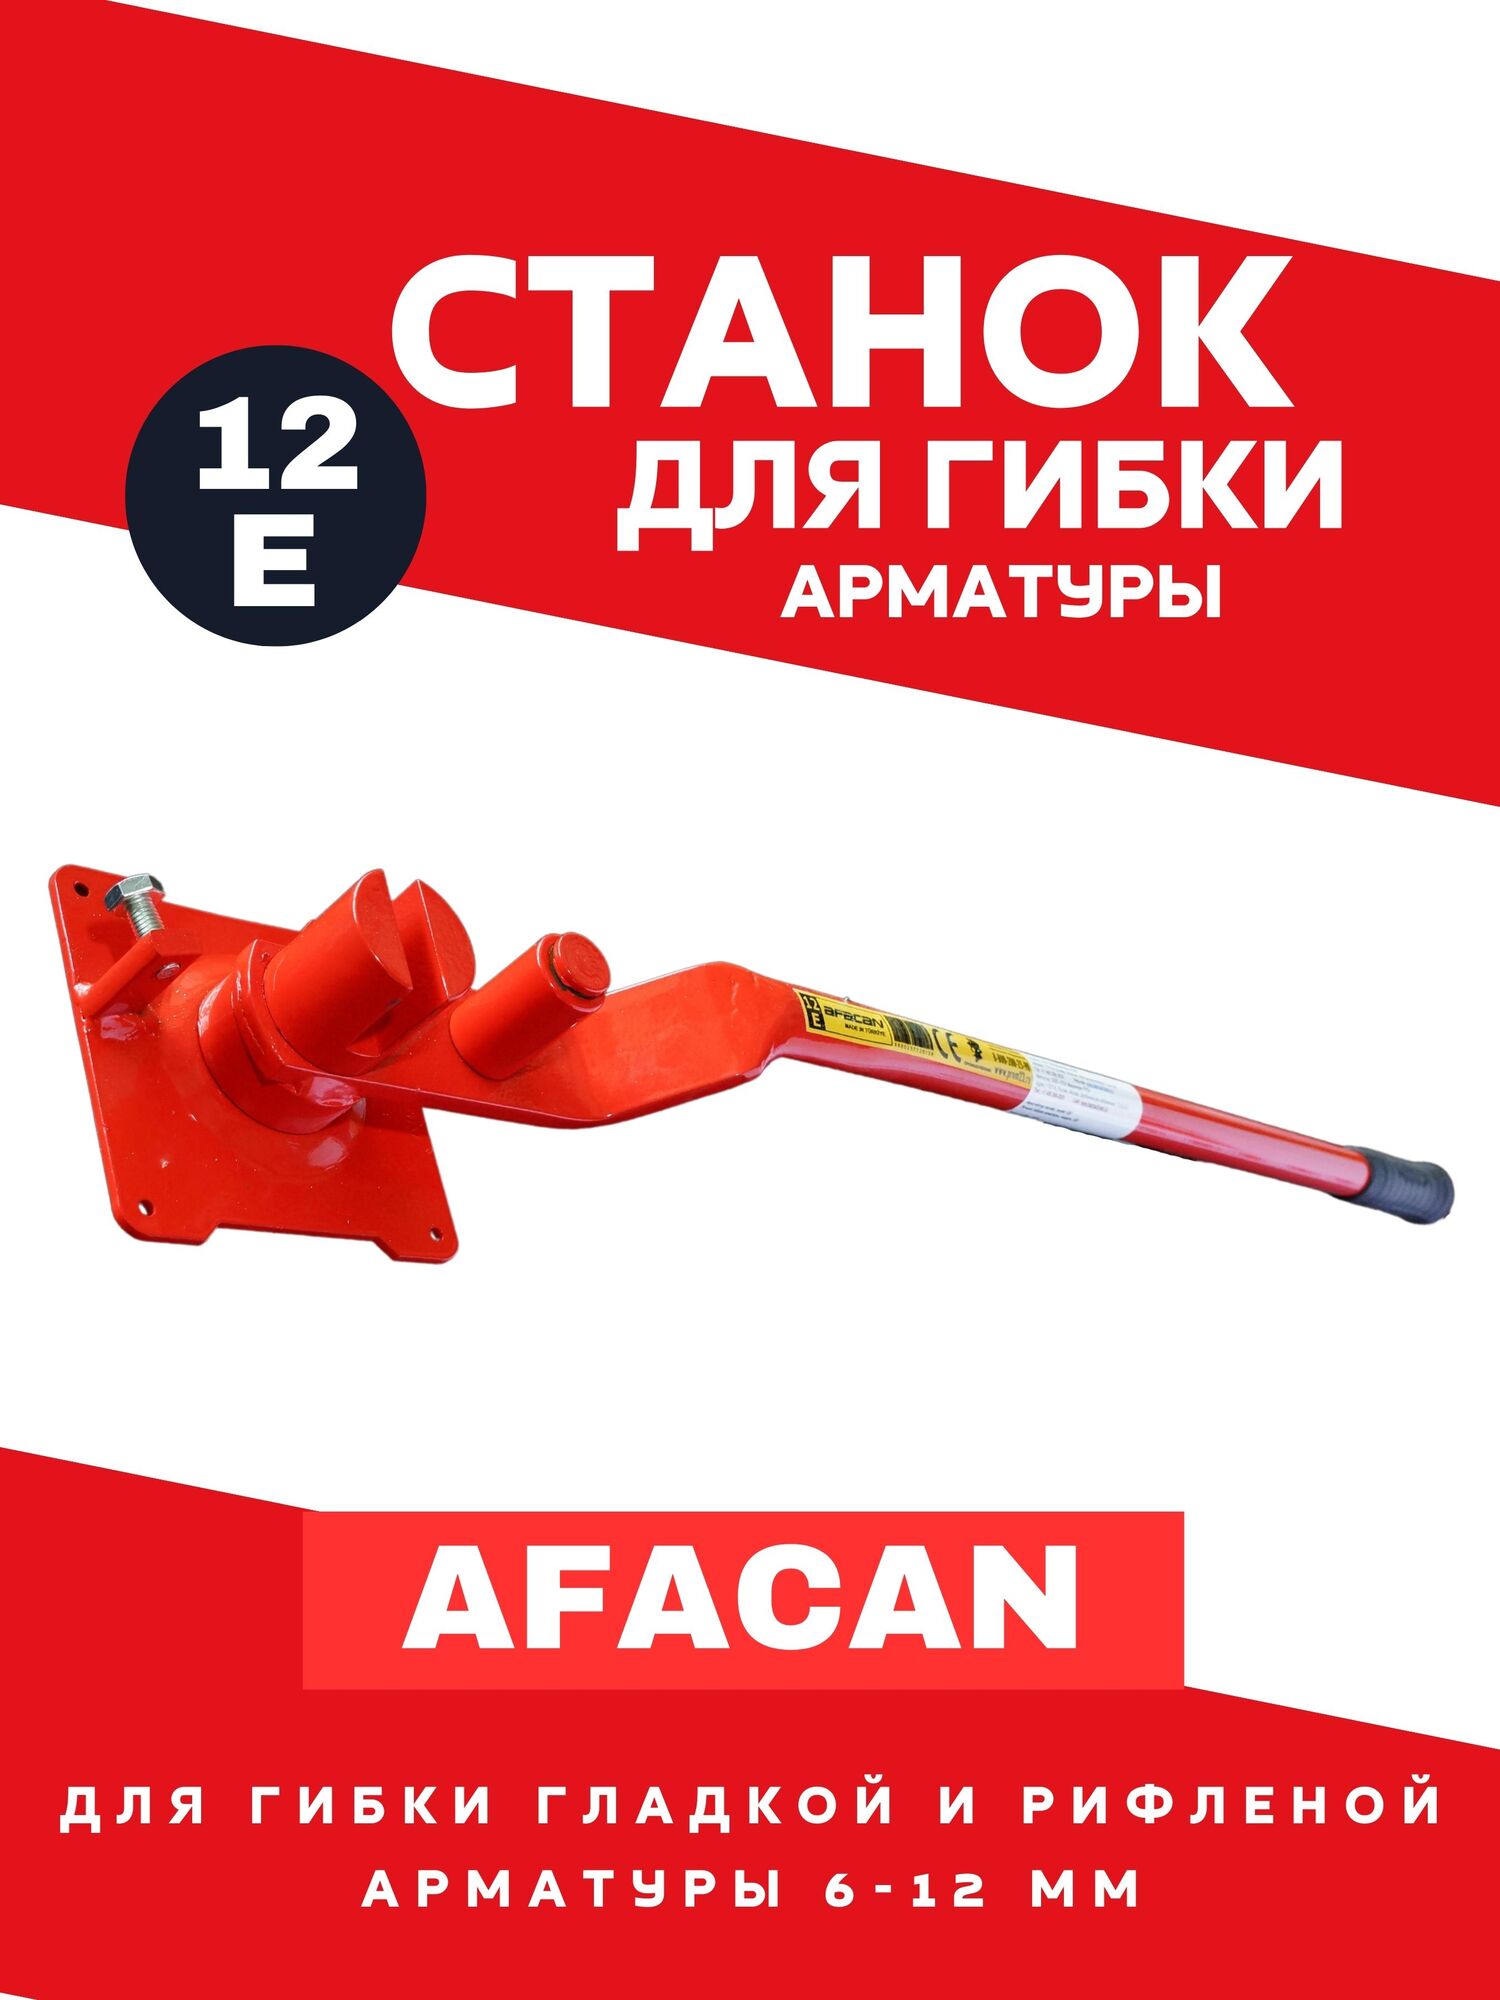 Ручной станок для гибки арматуры AFACAN 12Е